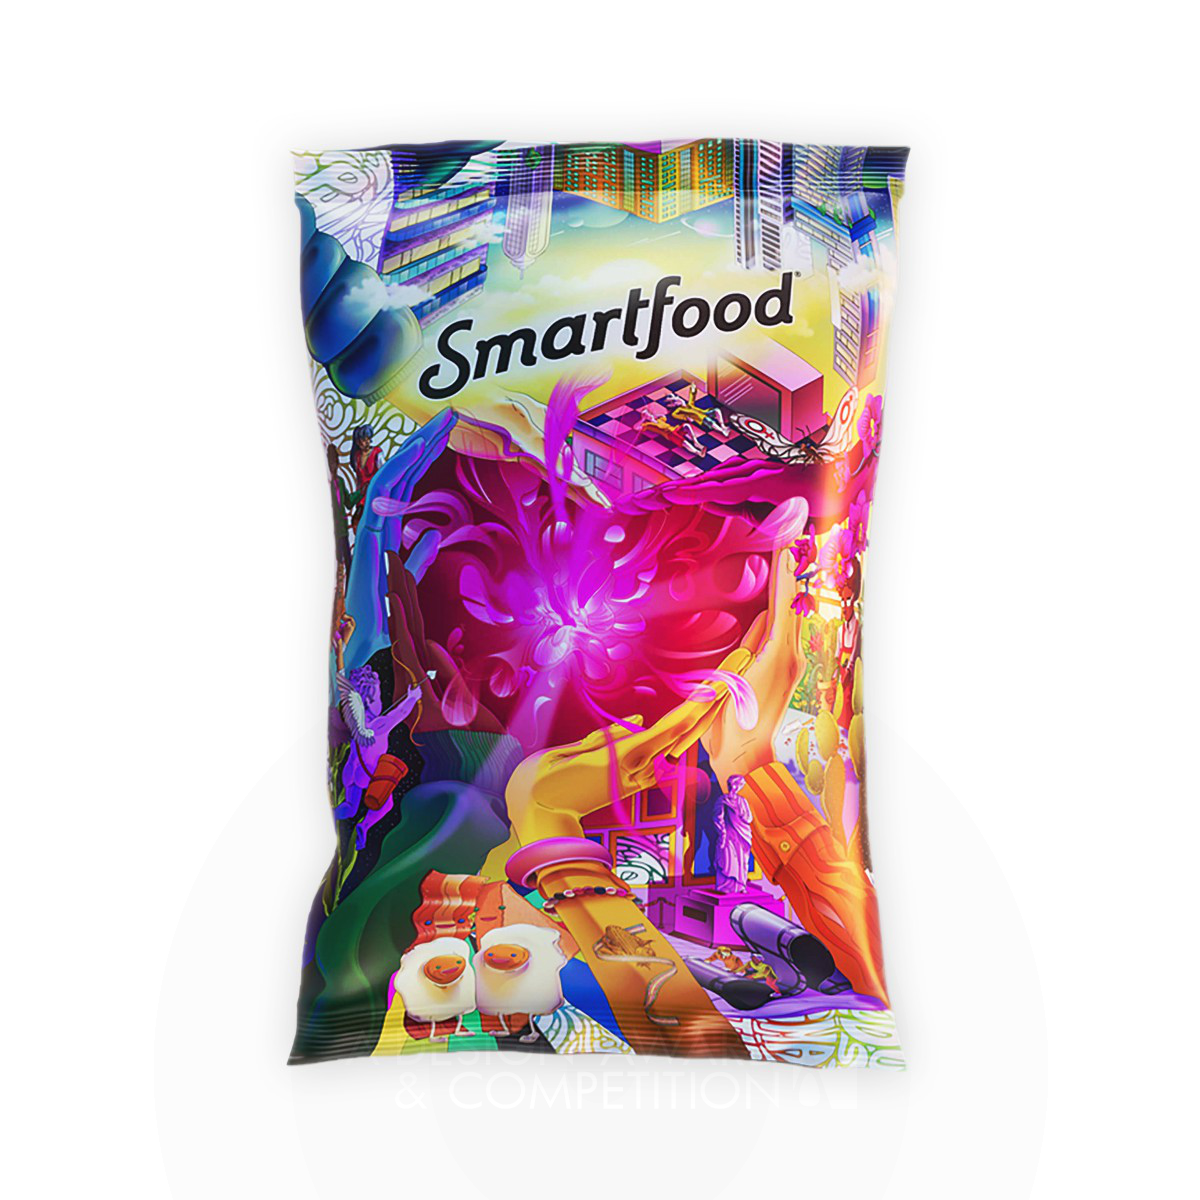 Good Smartfood x Glaad Food Packaging Design